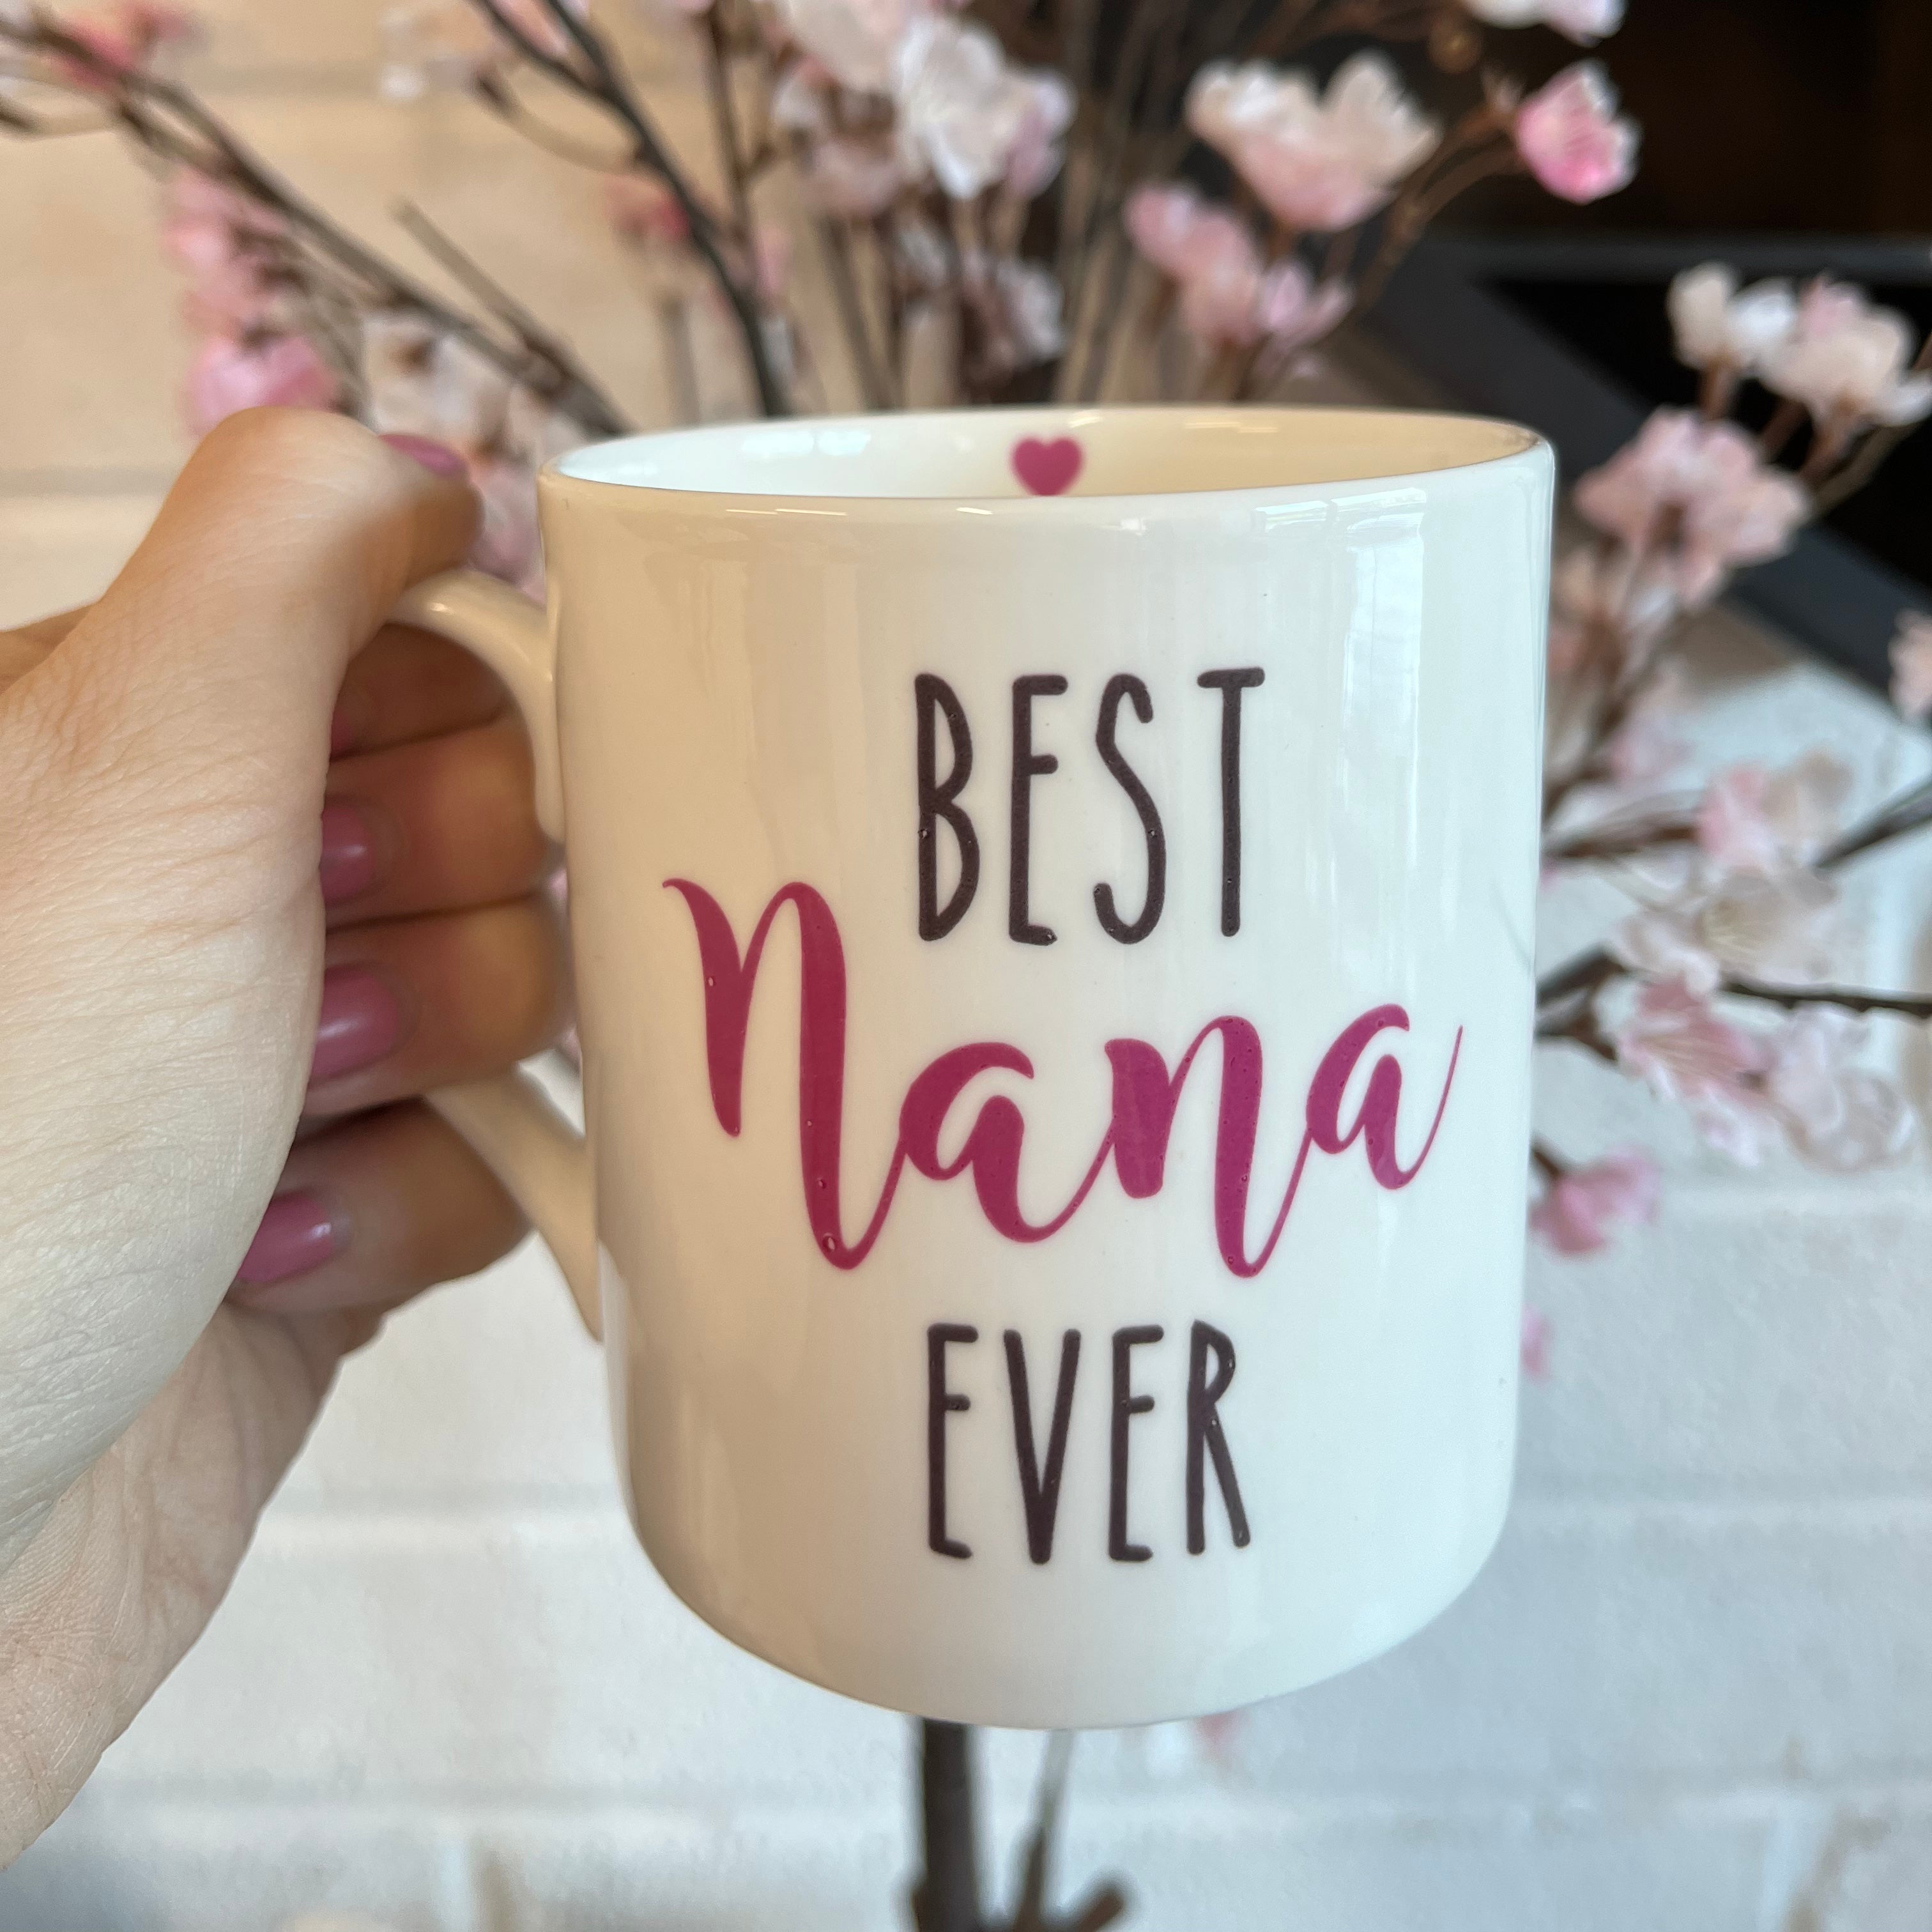 Best Nana